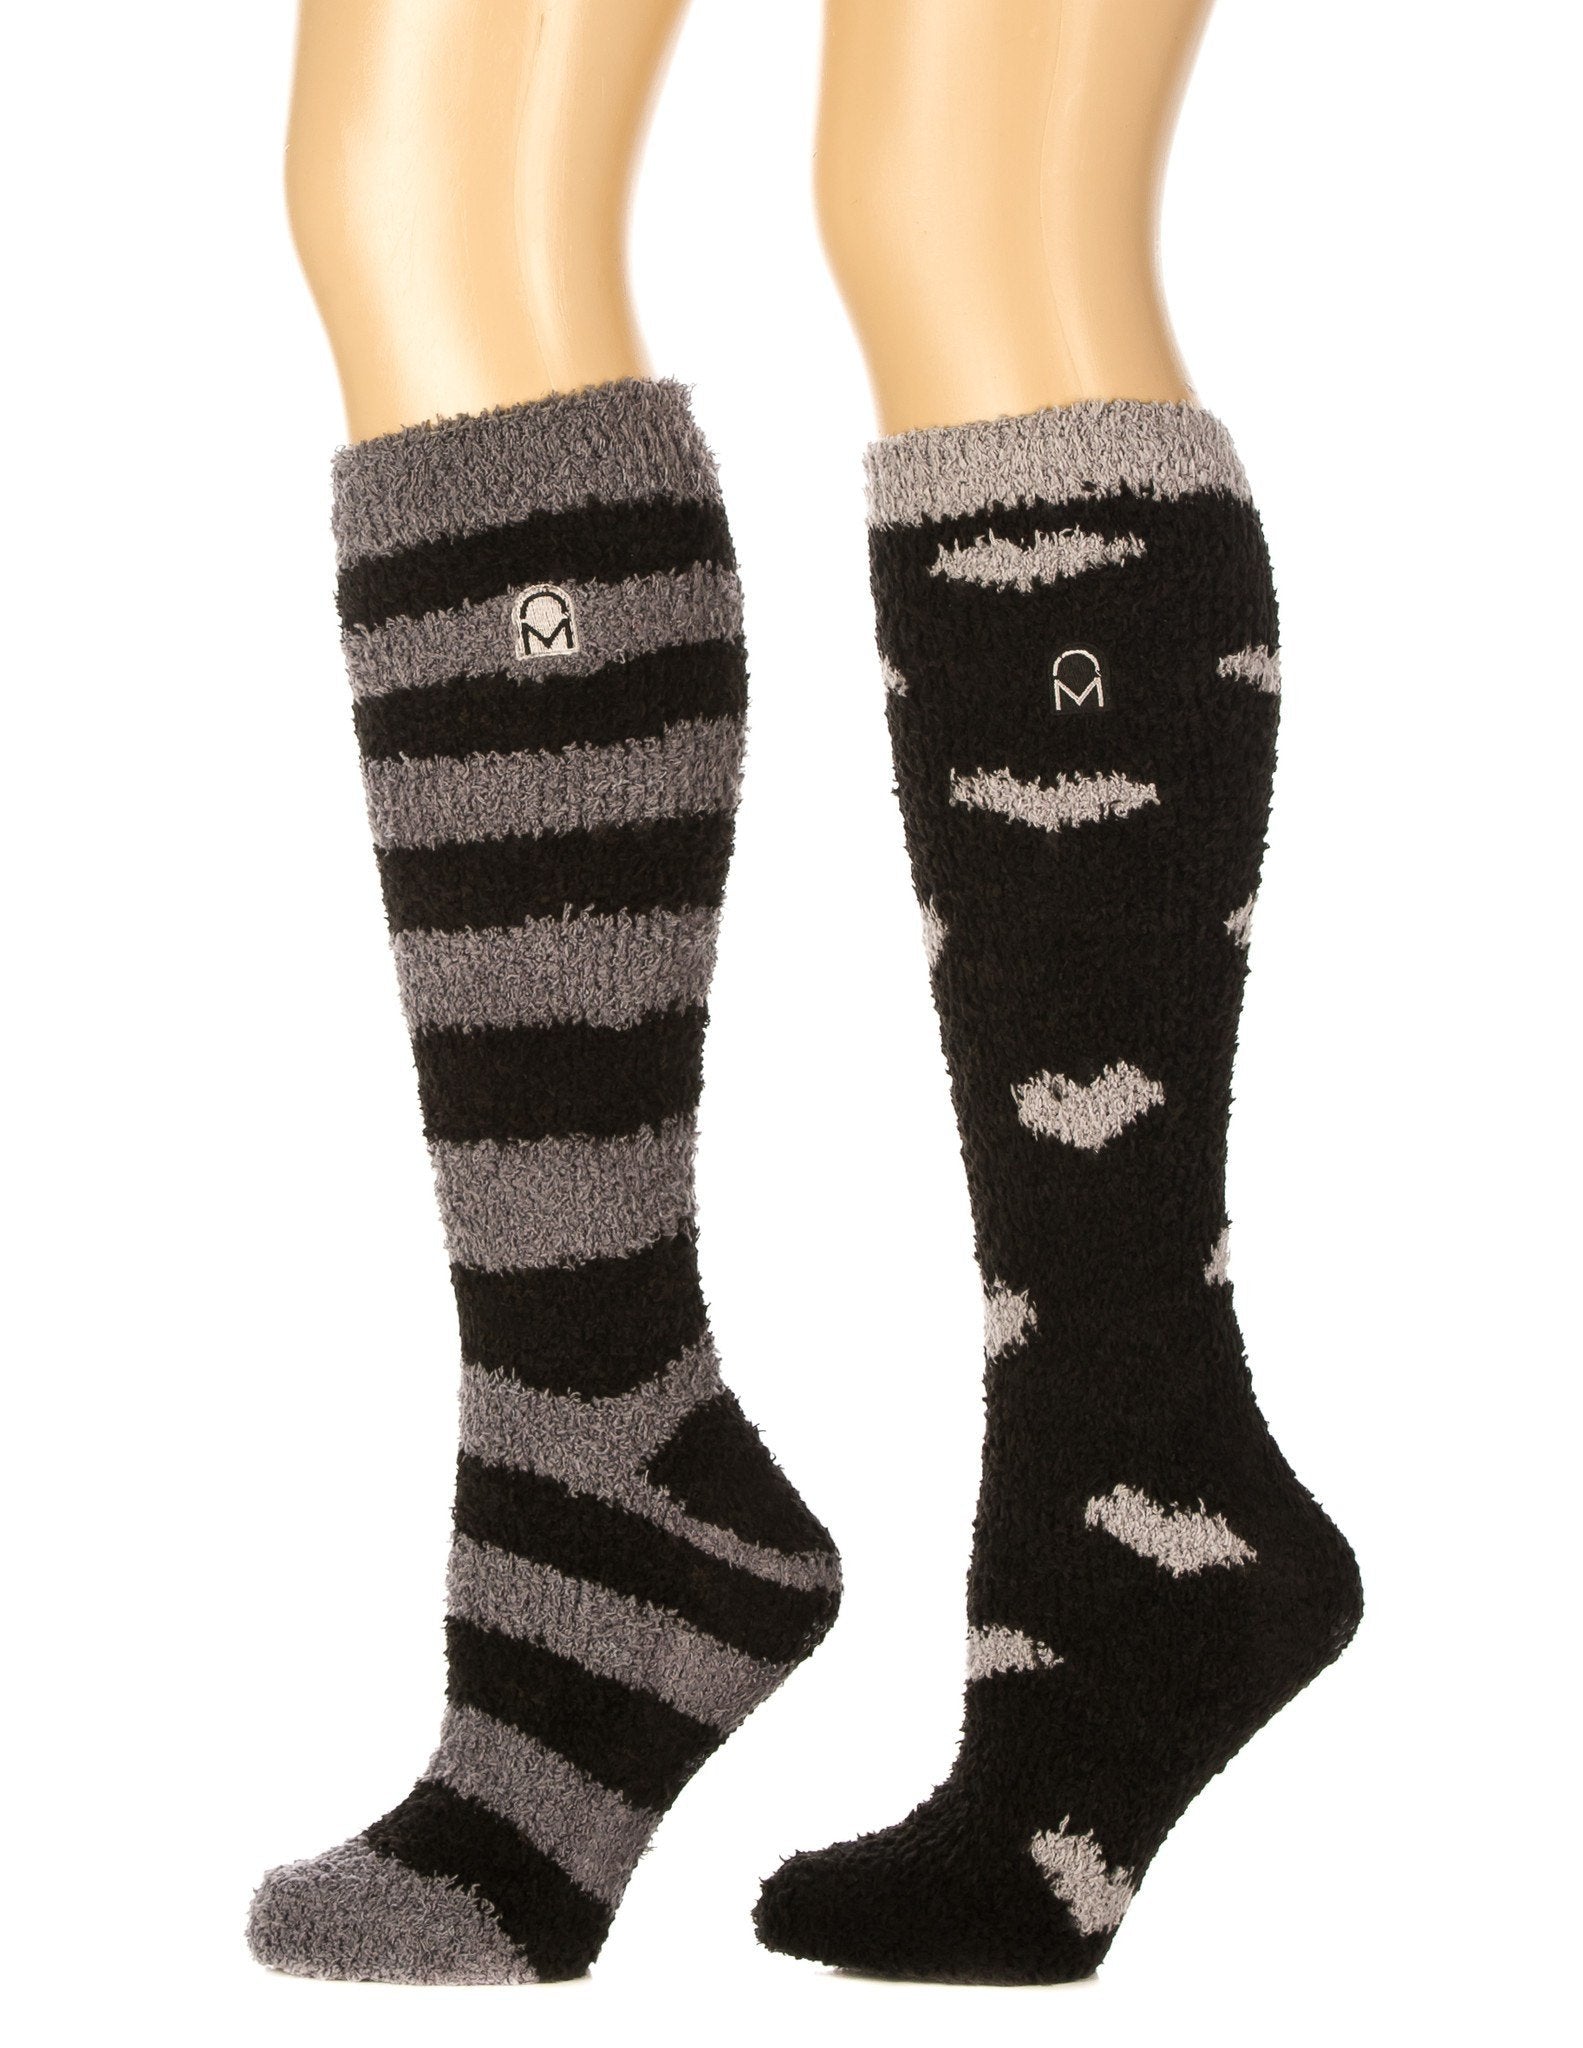 Women's (2 Pairs) Soft Anti-Skid Fuzzy Winter Knee High Socks - Set A4